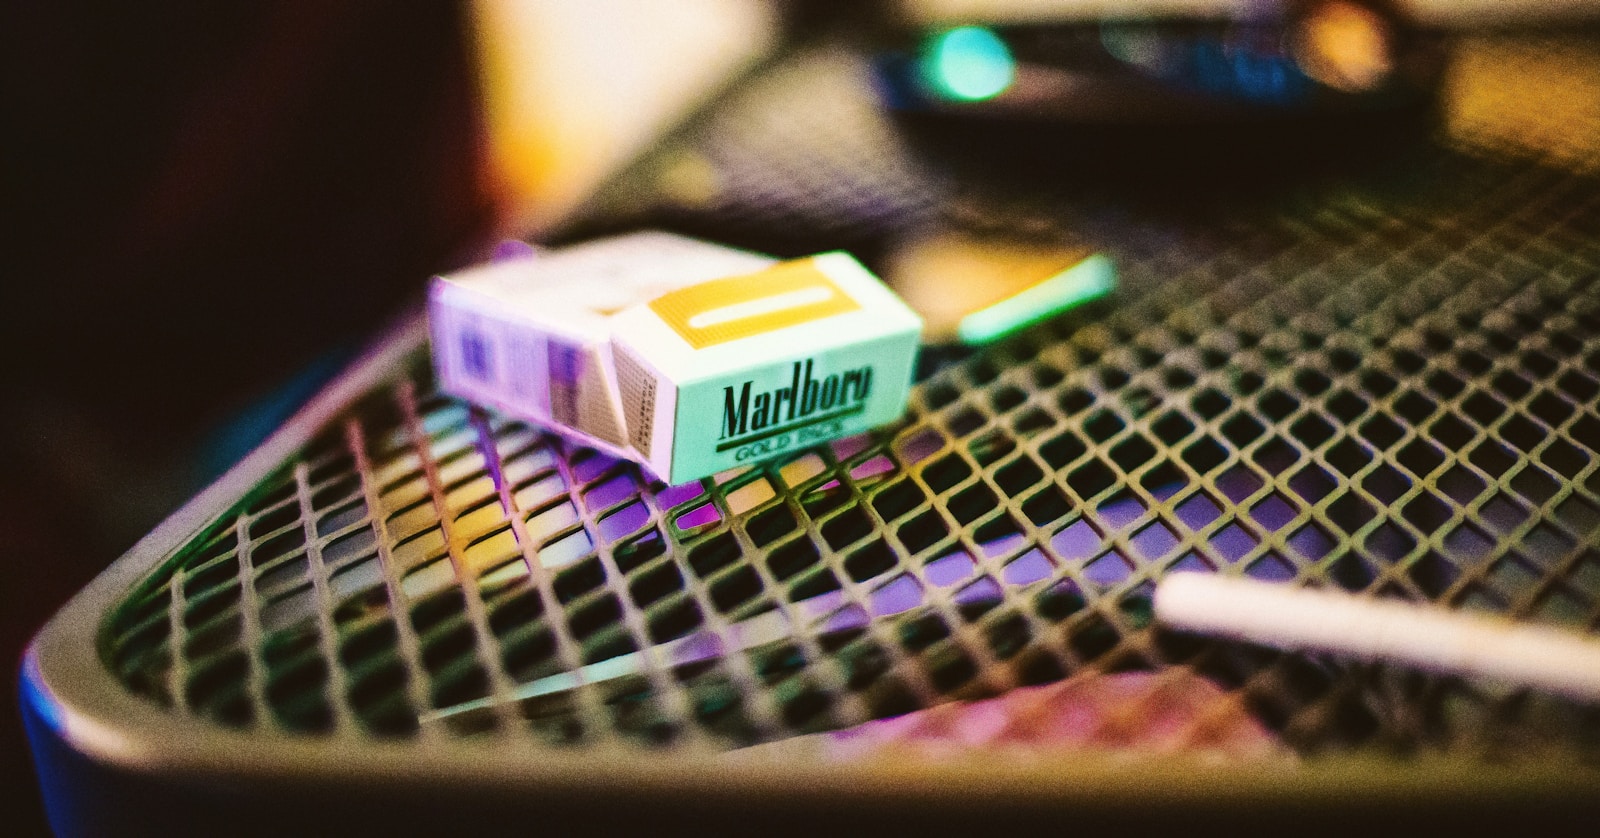 white and yellow Marlboro cigarette box